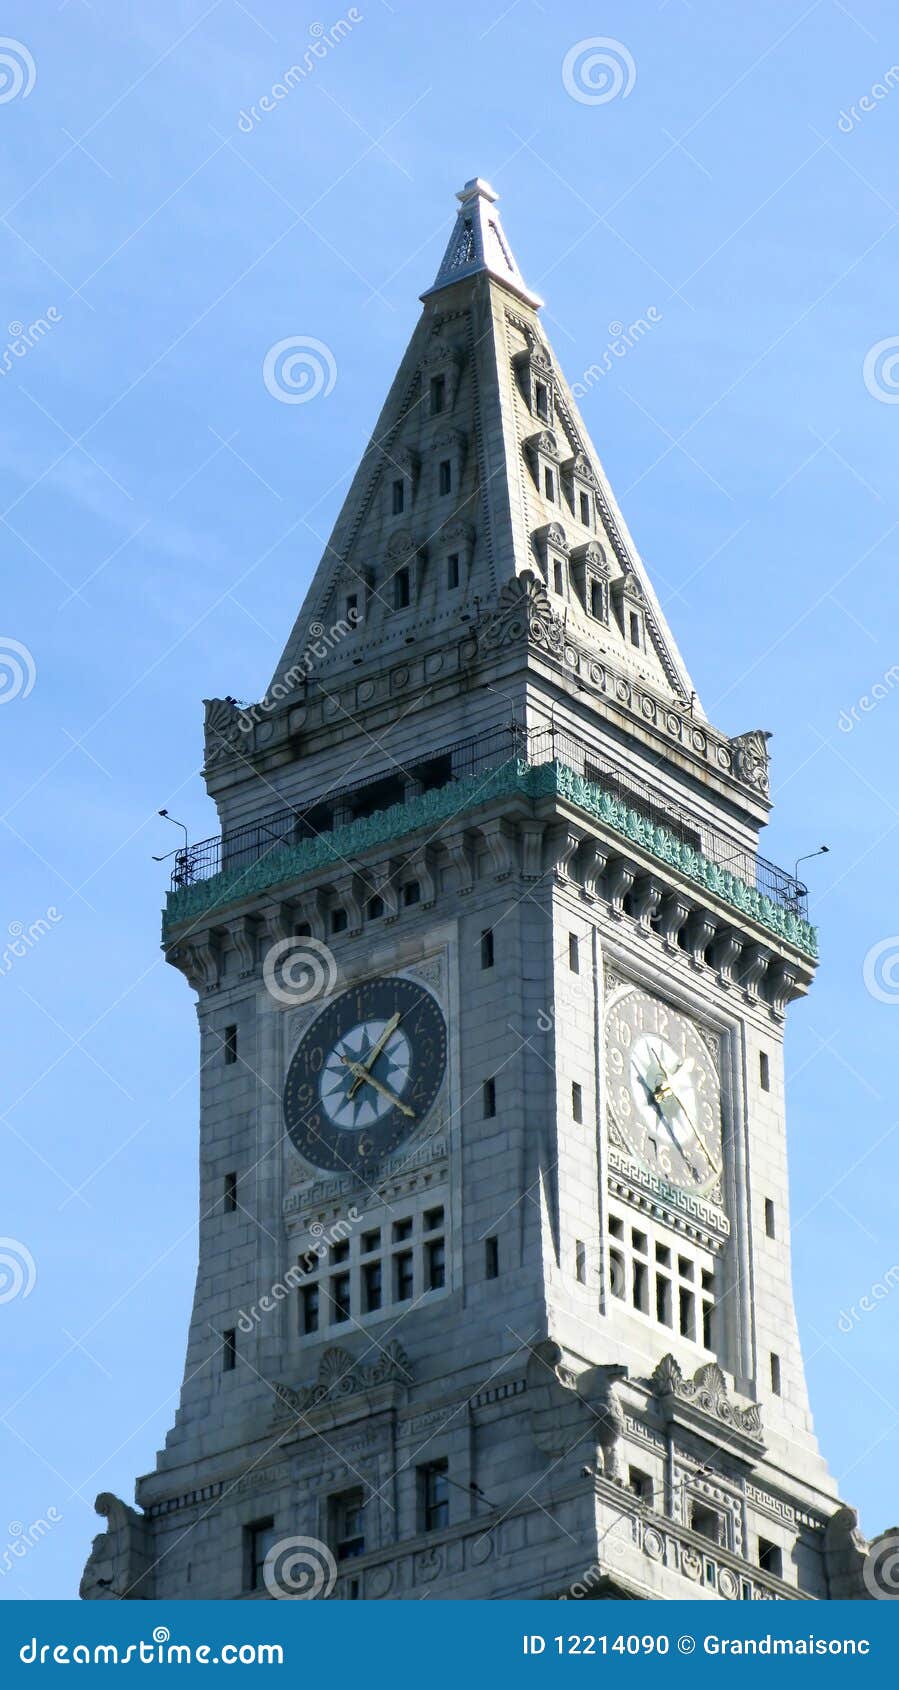 Old stone clock tower stock photo. Image of windows, angle 